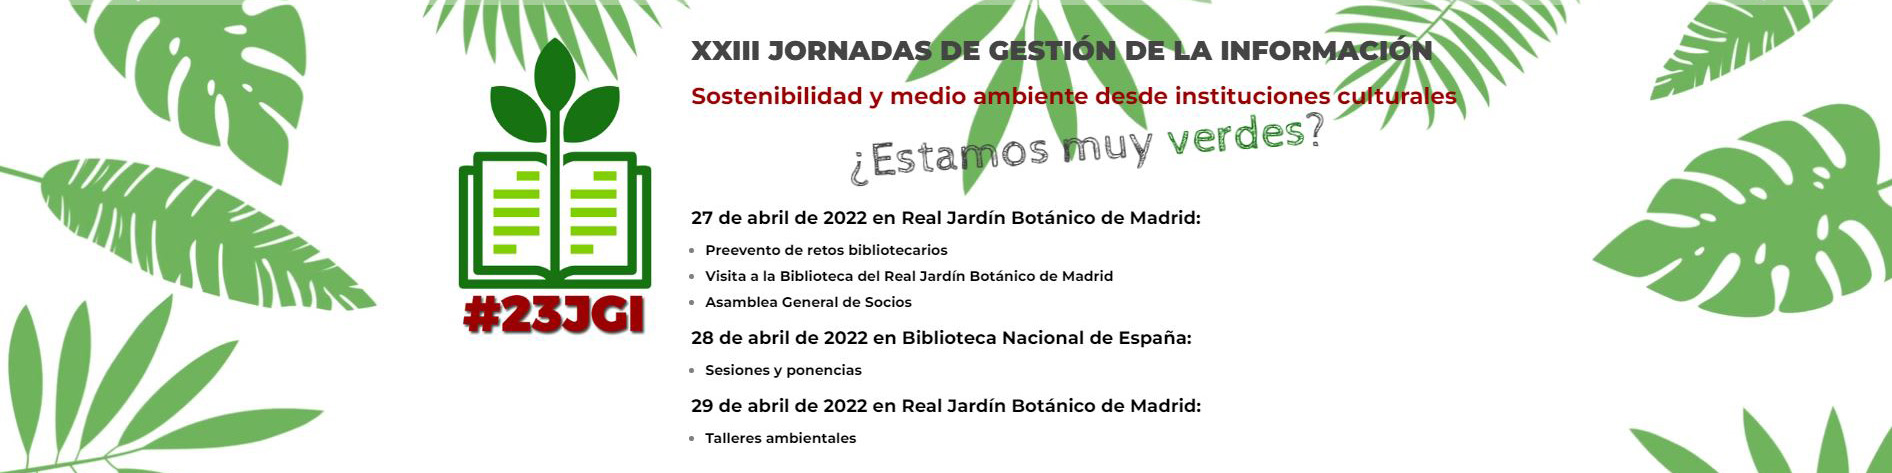 XXIII Jornadas_Gestion_Informacion_SEDIC